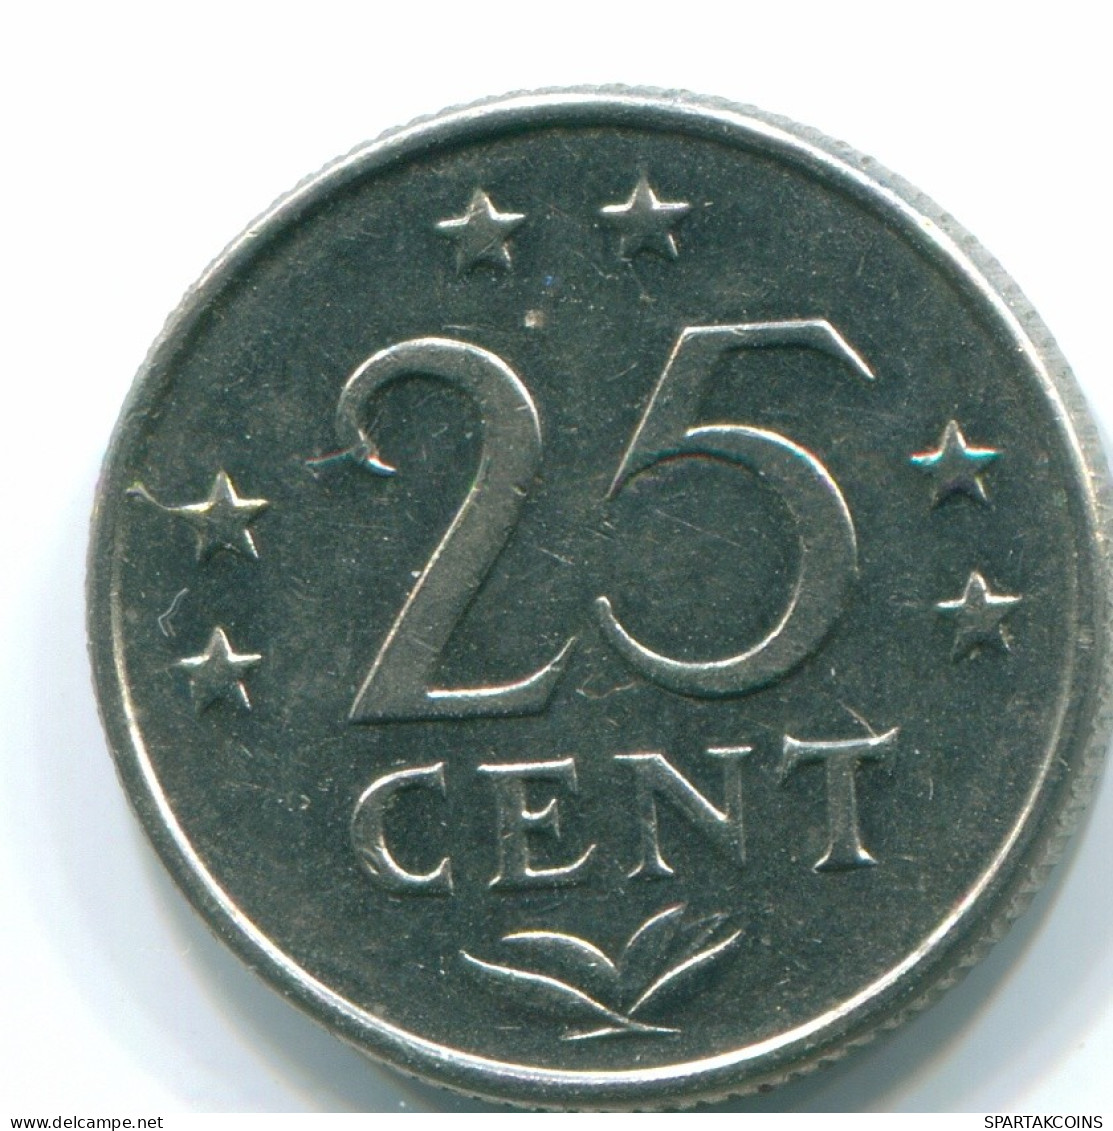 25 CENTS 1970 NETHERLANDS ANTILLES Nickel Colonial Coin #S11414.U.A - Antilles Néerlandaises